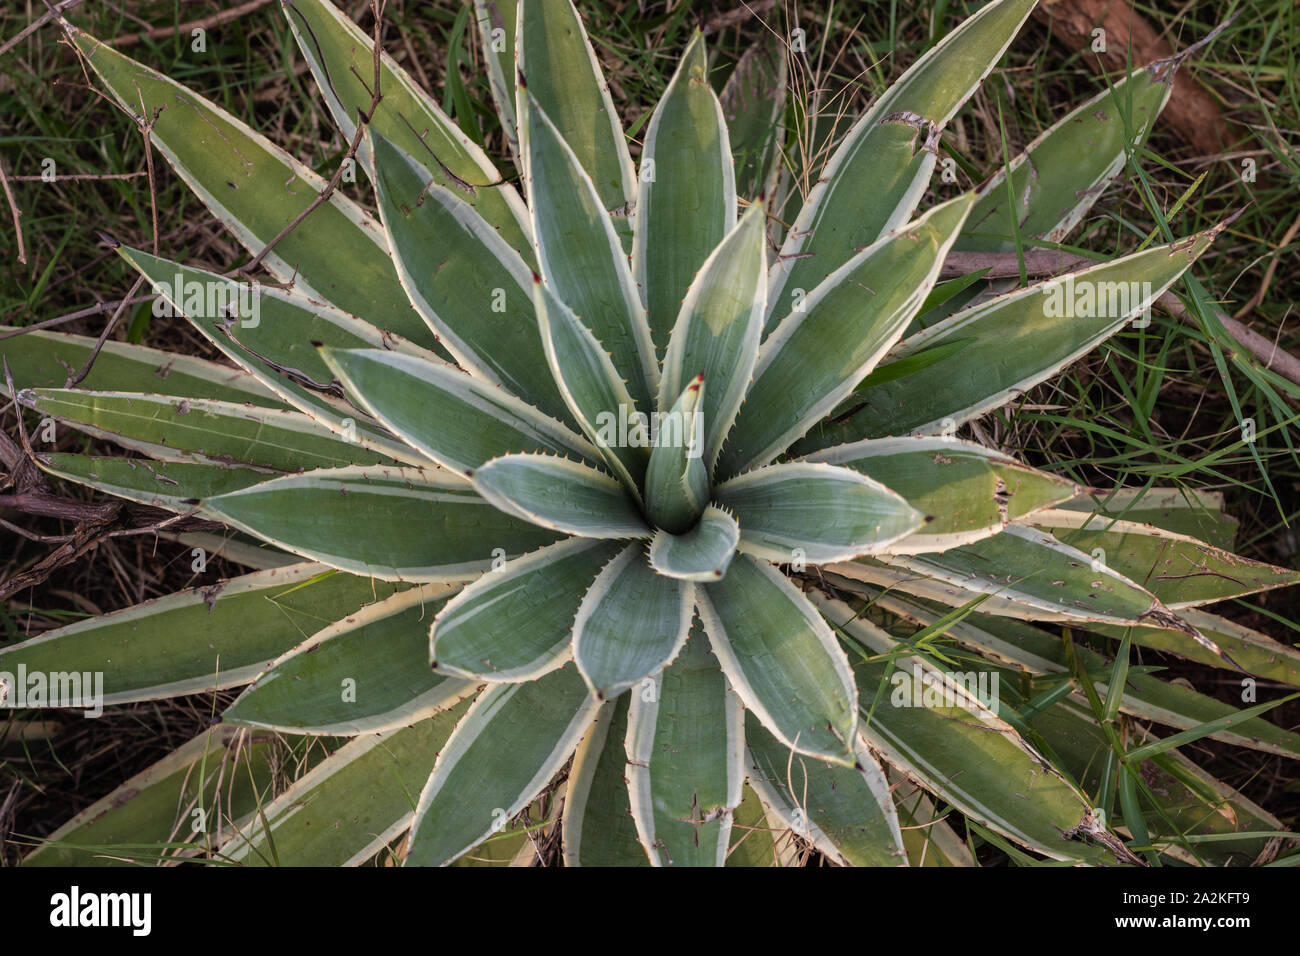 Agavenartige pflanze -Fotos und -Bildmaterial in hoher Auflösung – Alamy